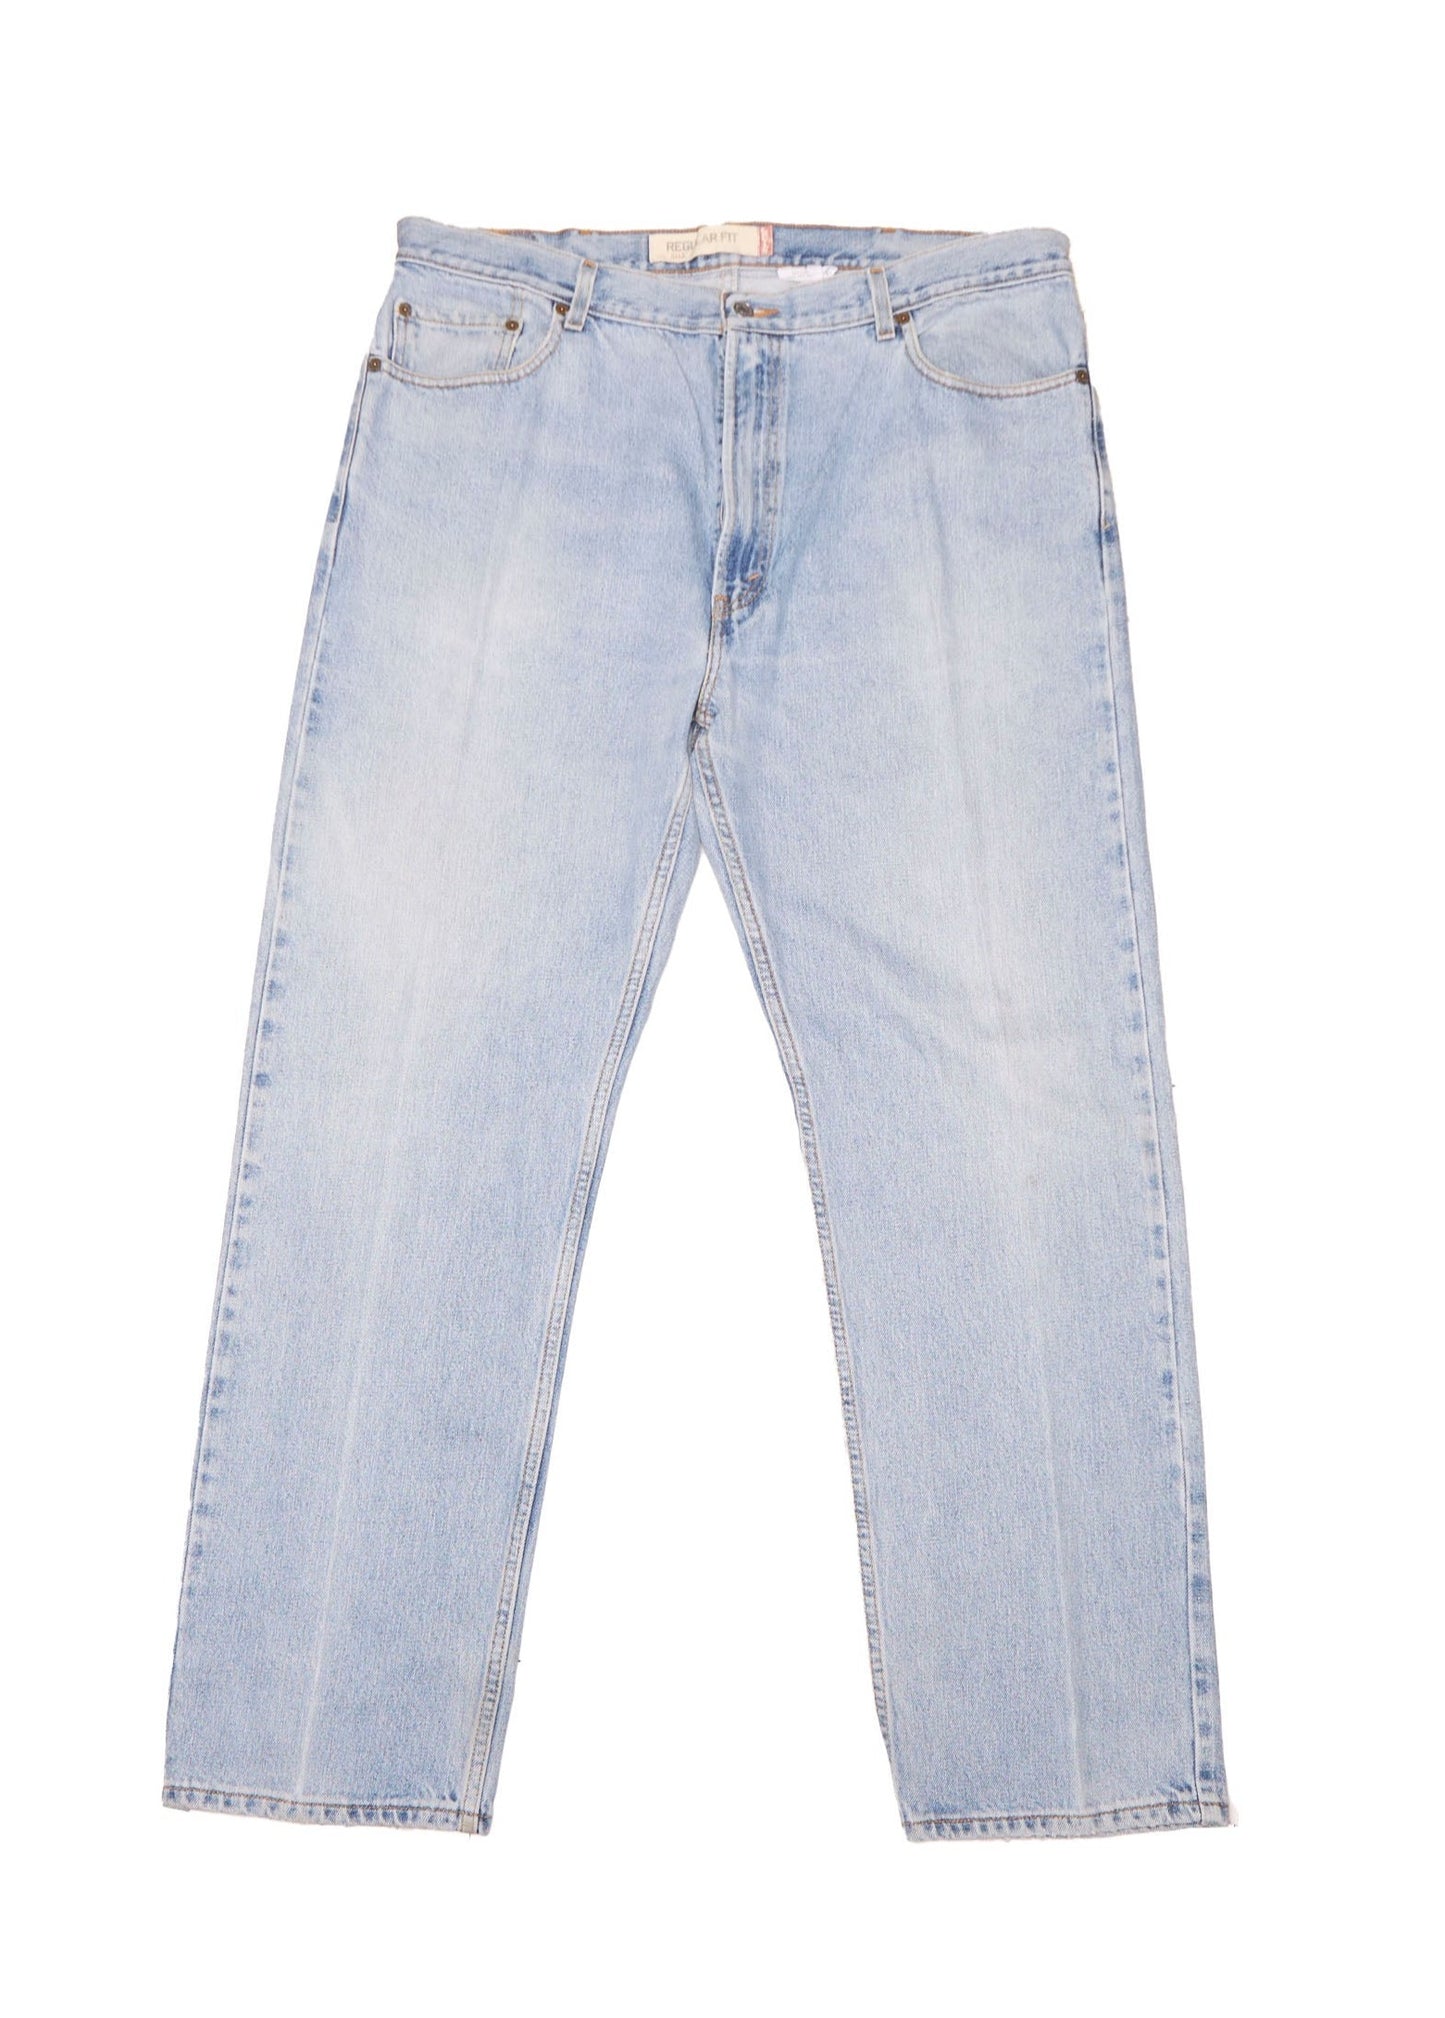 Zip Levis Straight Cut Jeans - W42" L32"